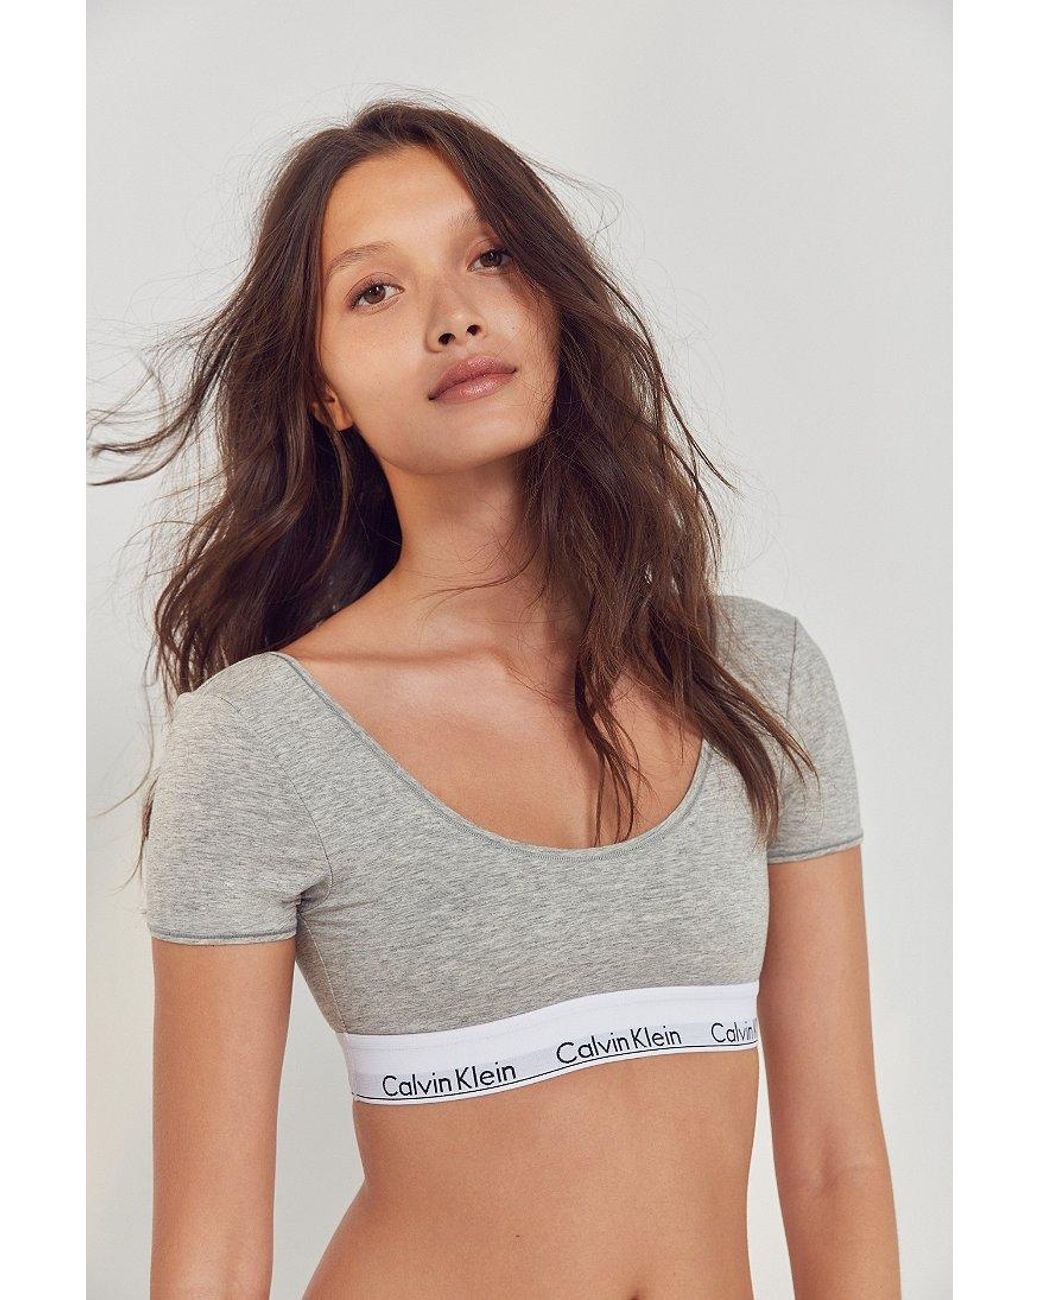 Calvin Klein Short Sleeve Bra Top in Gray | Lyst